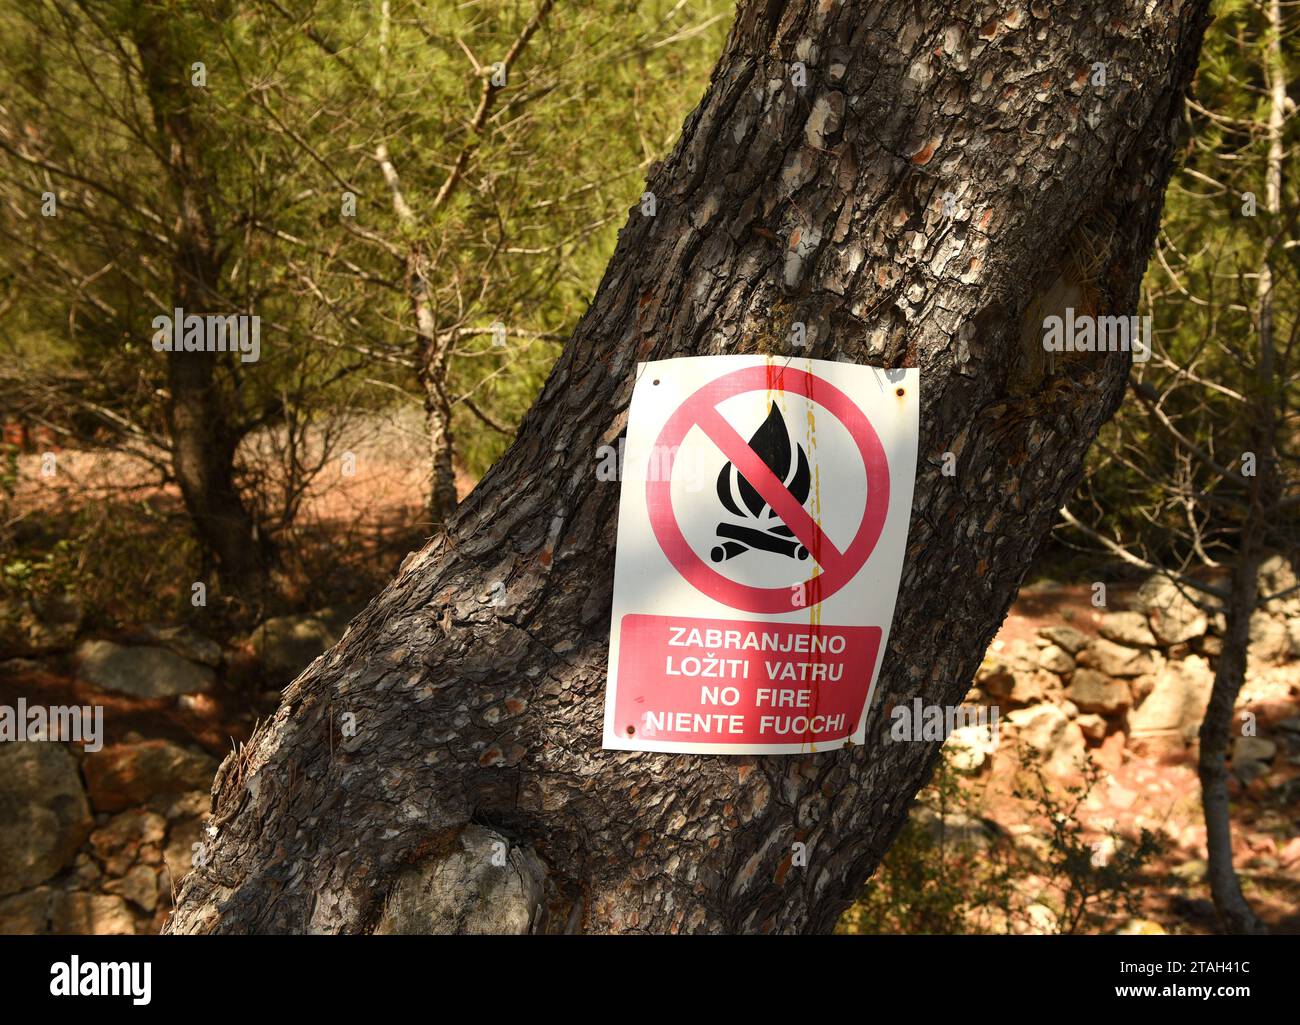 Lastovo, Croatia - August 2017: Sign 'No Fire' in forest on island Lastovo, Croatia. Stock Photo